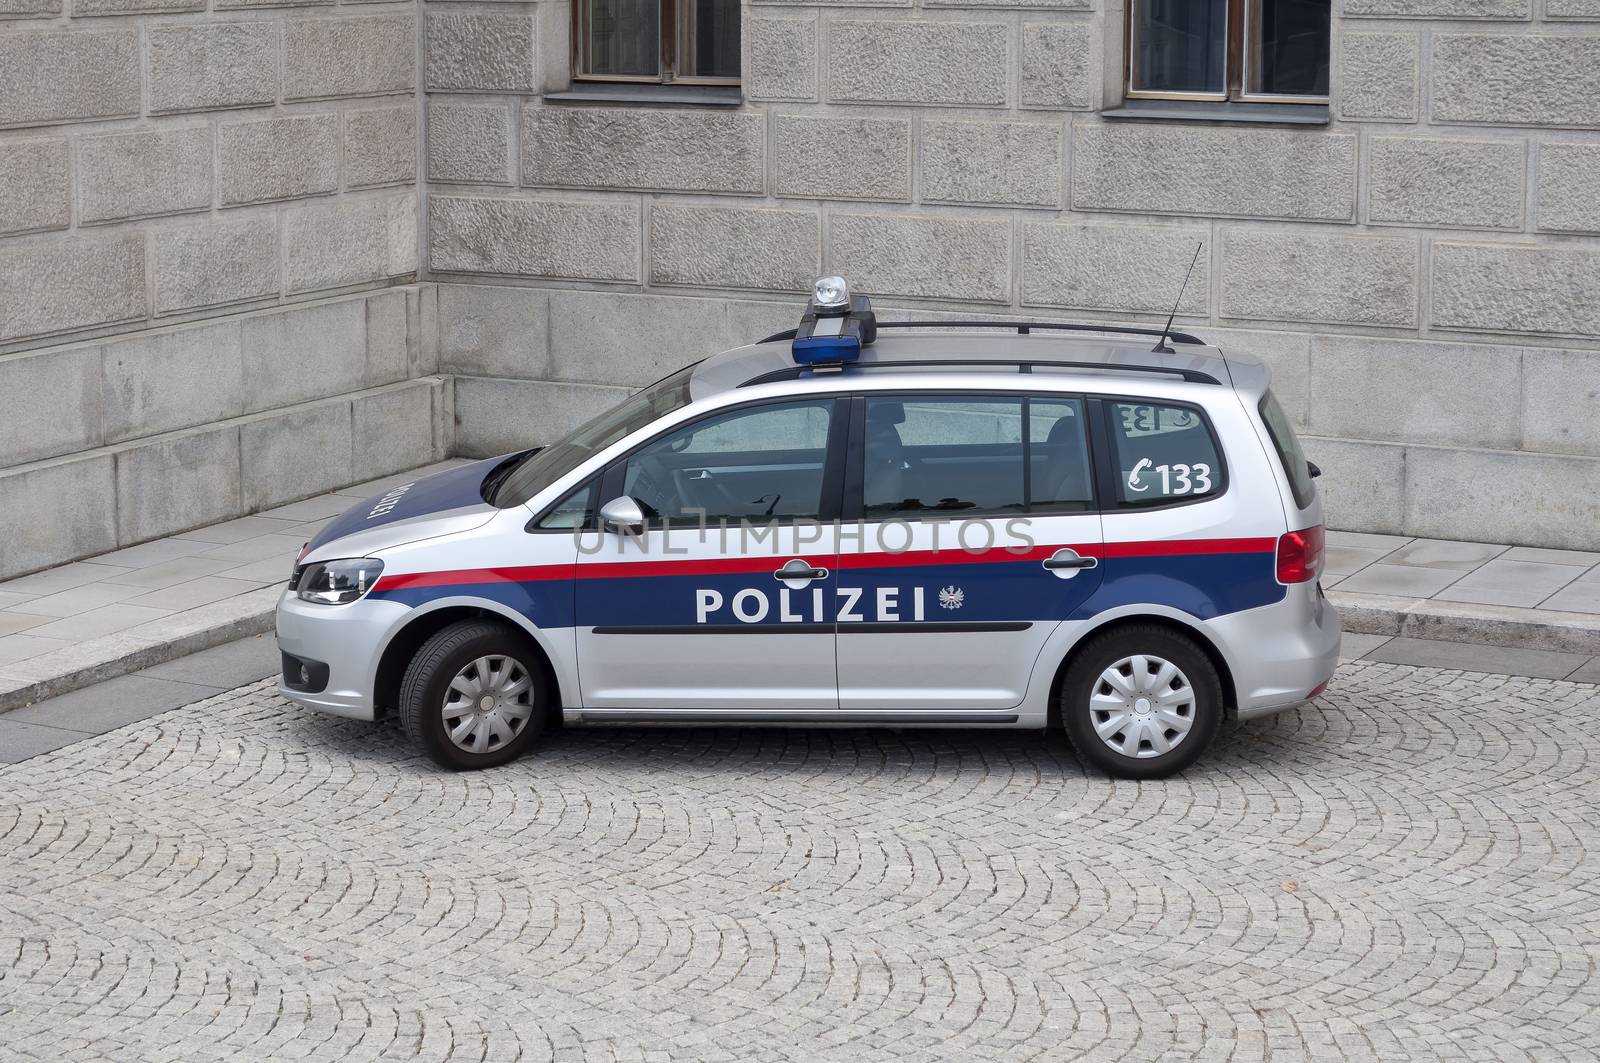 Police car. by FER737NG